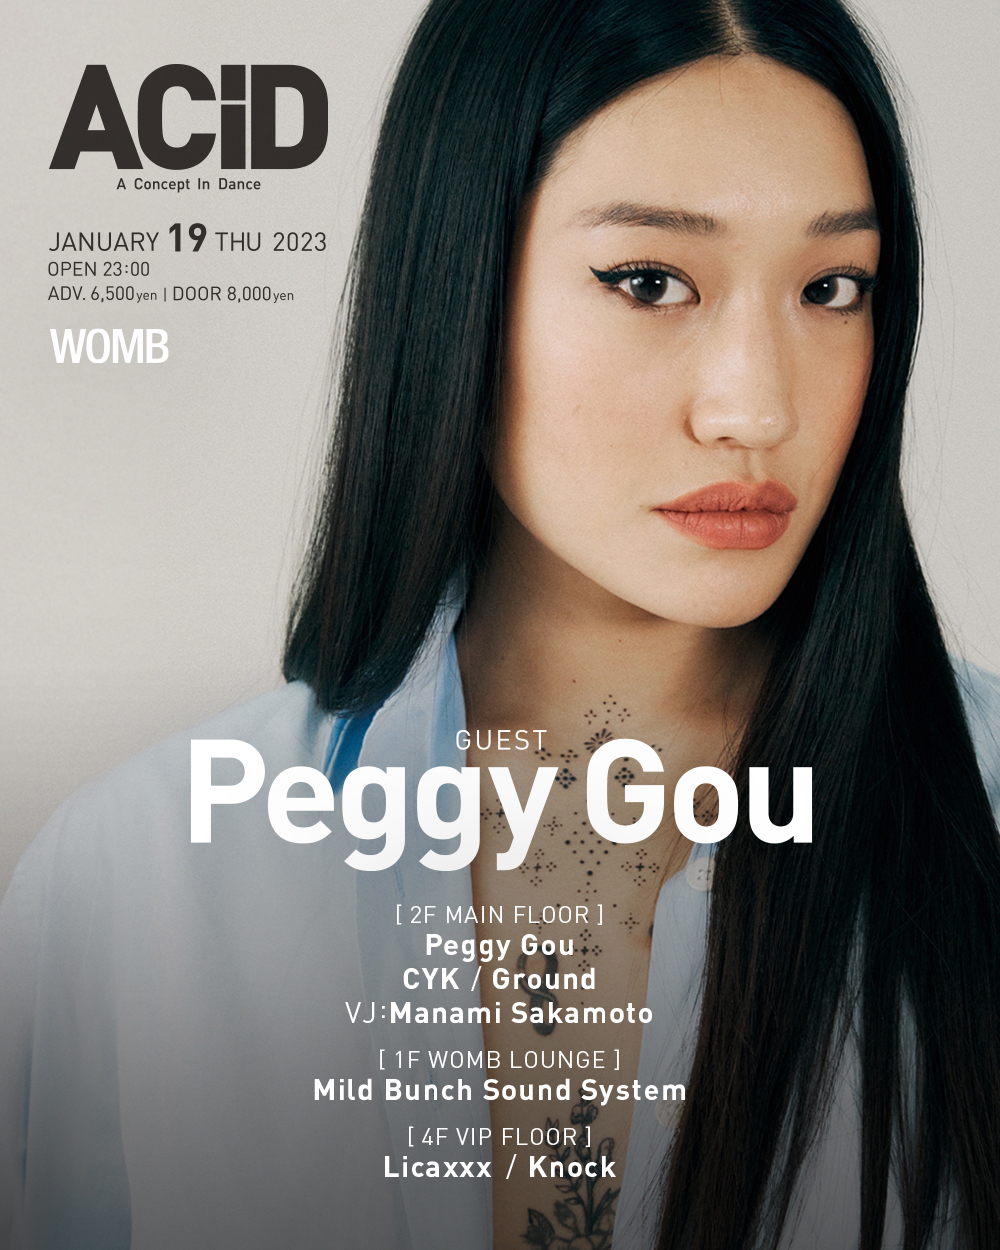 ACiD: A Concept in Dance Peggy Gou